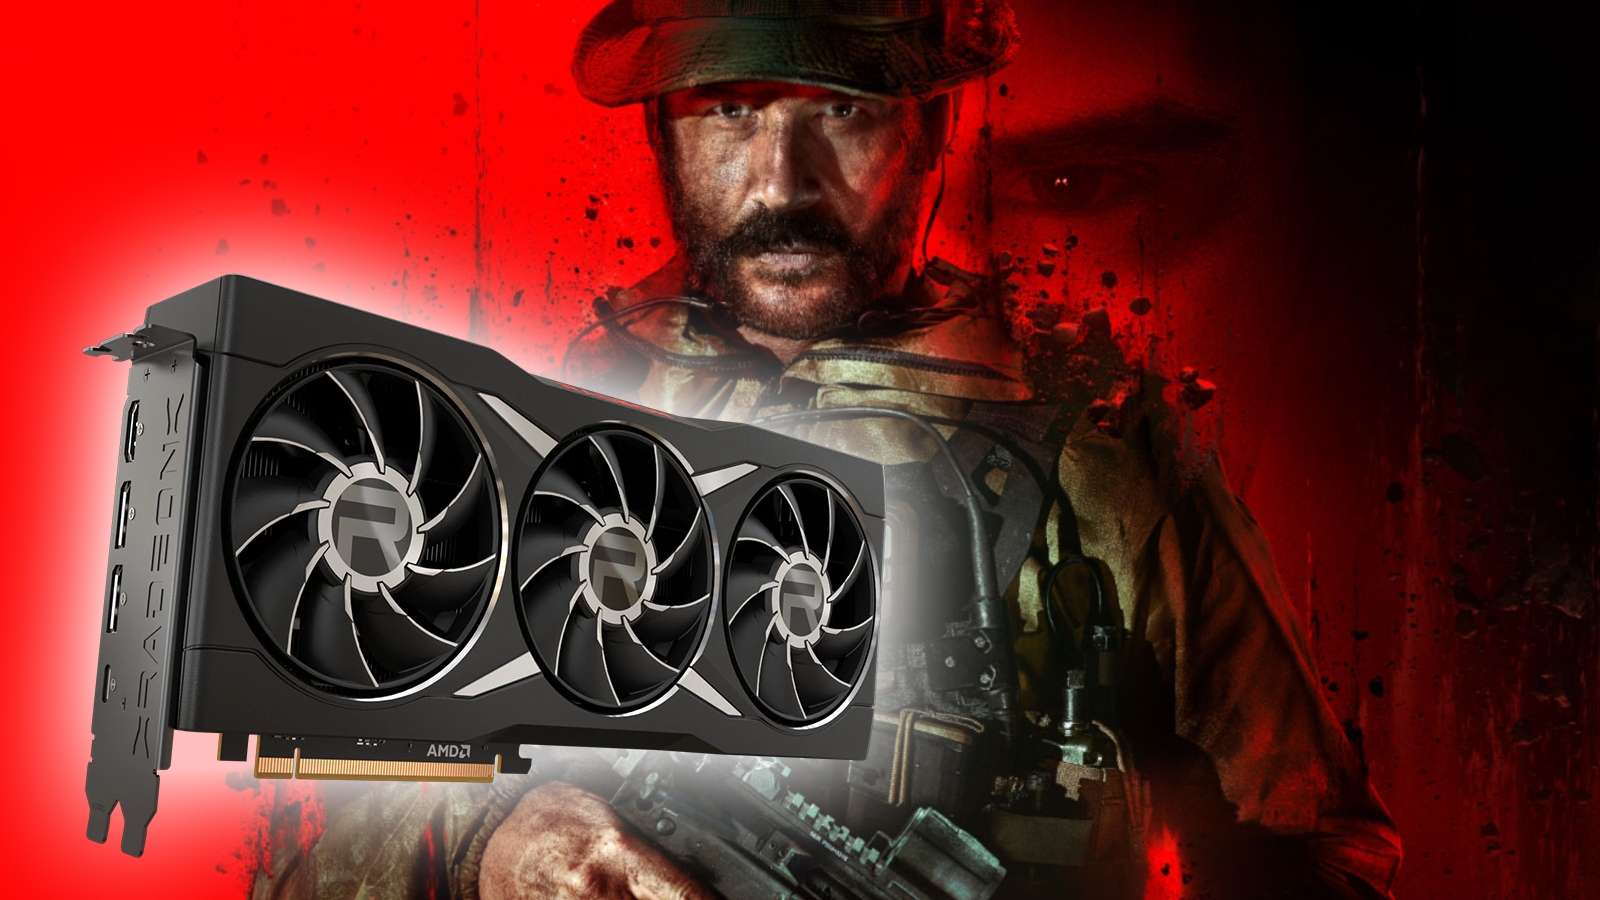 Modern Warfare 3 key art with AMD GPU